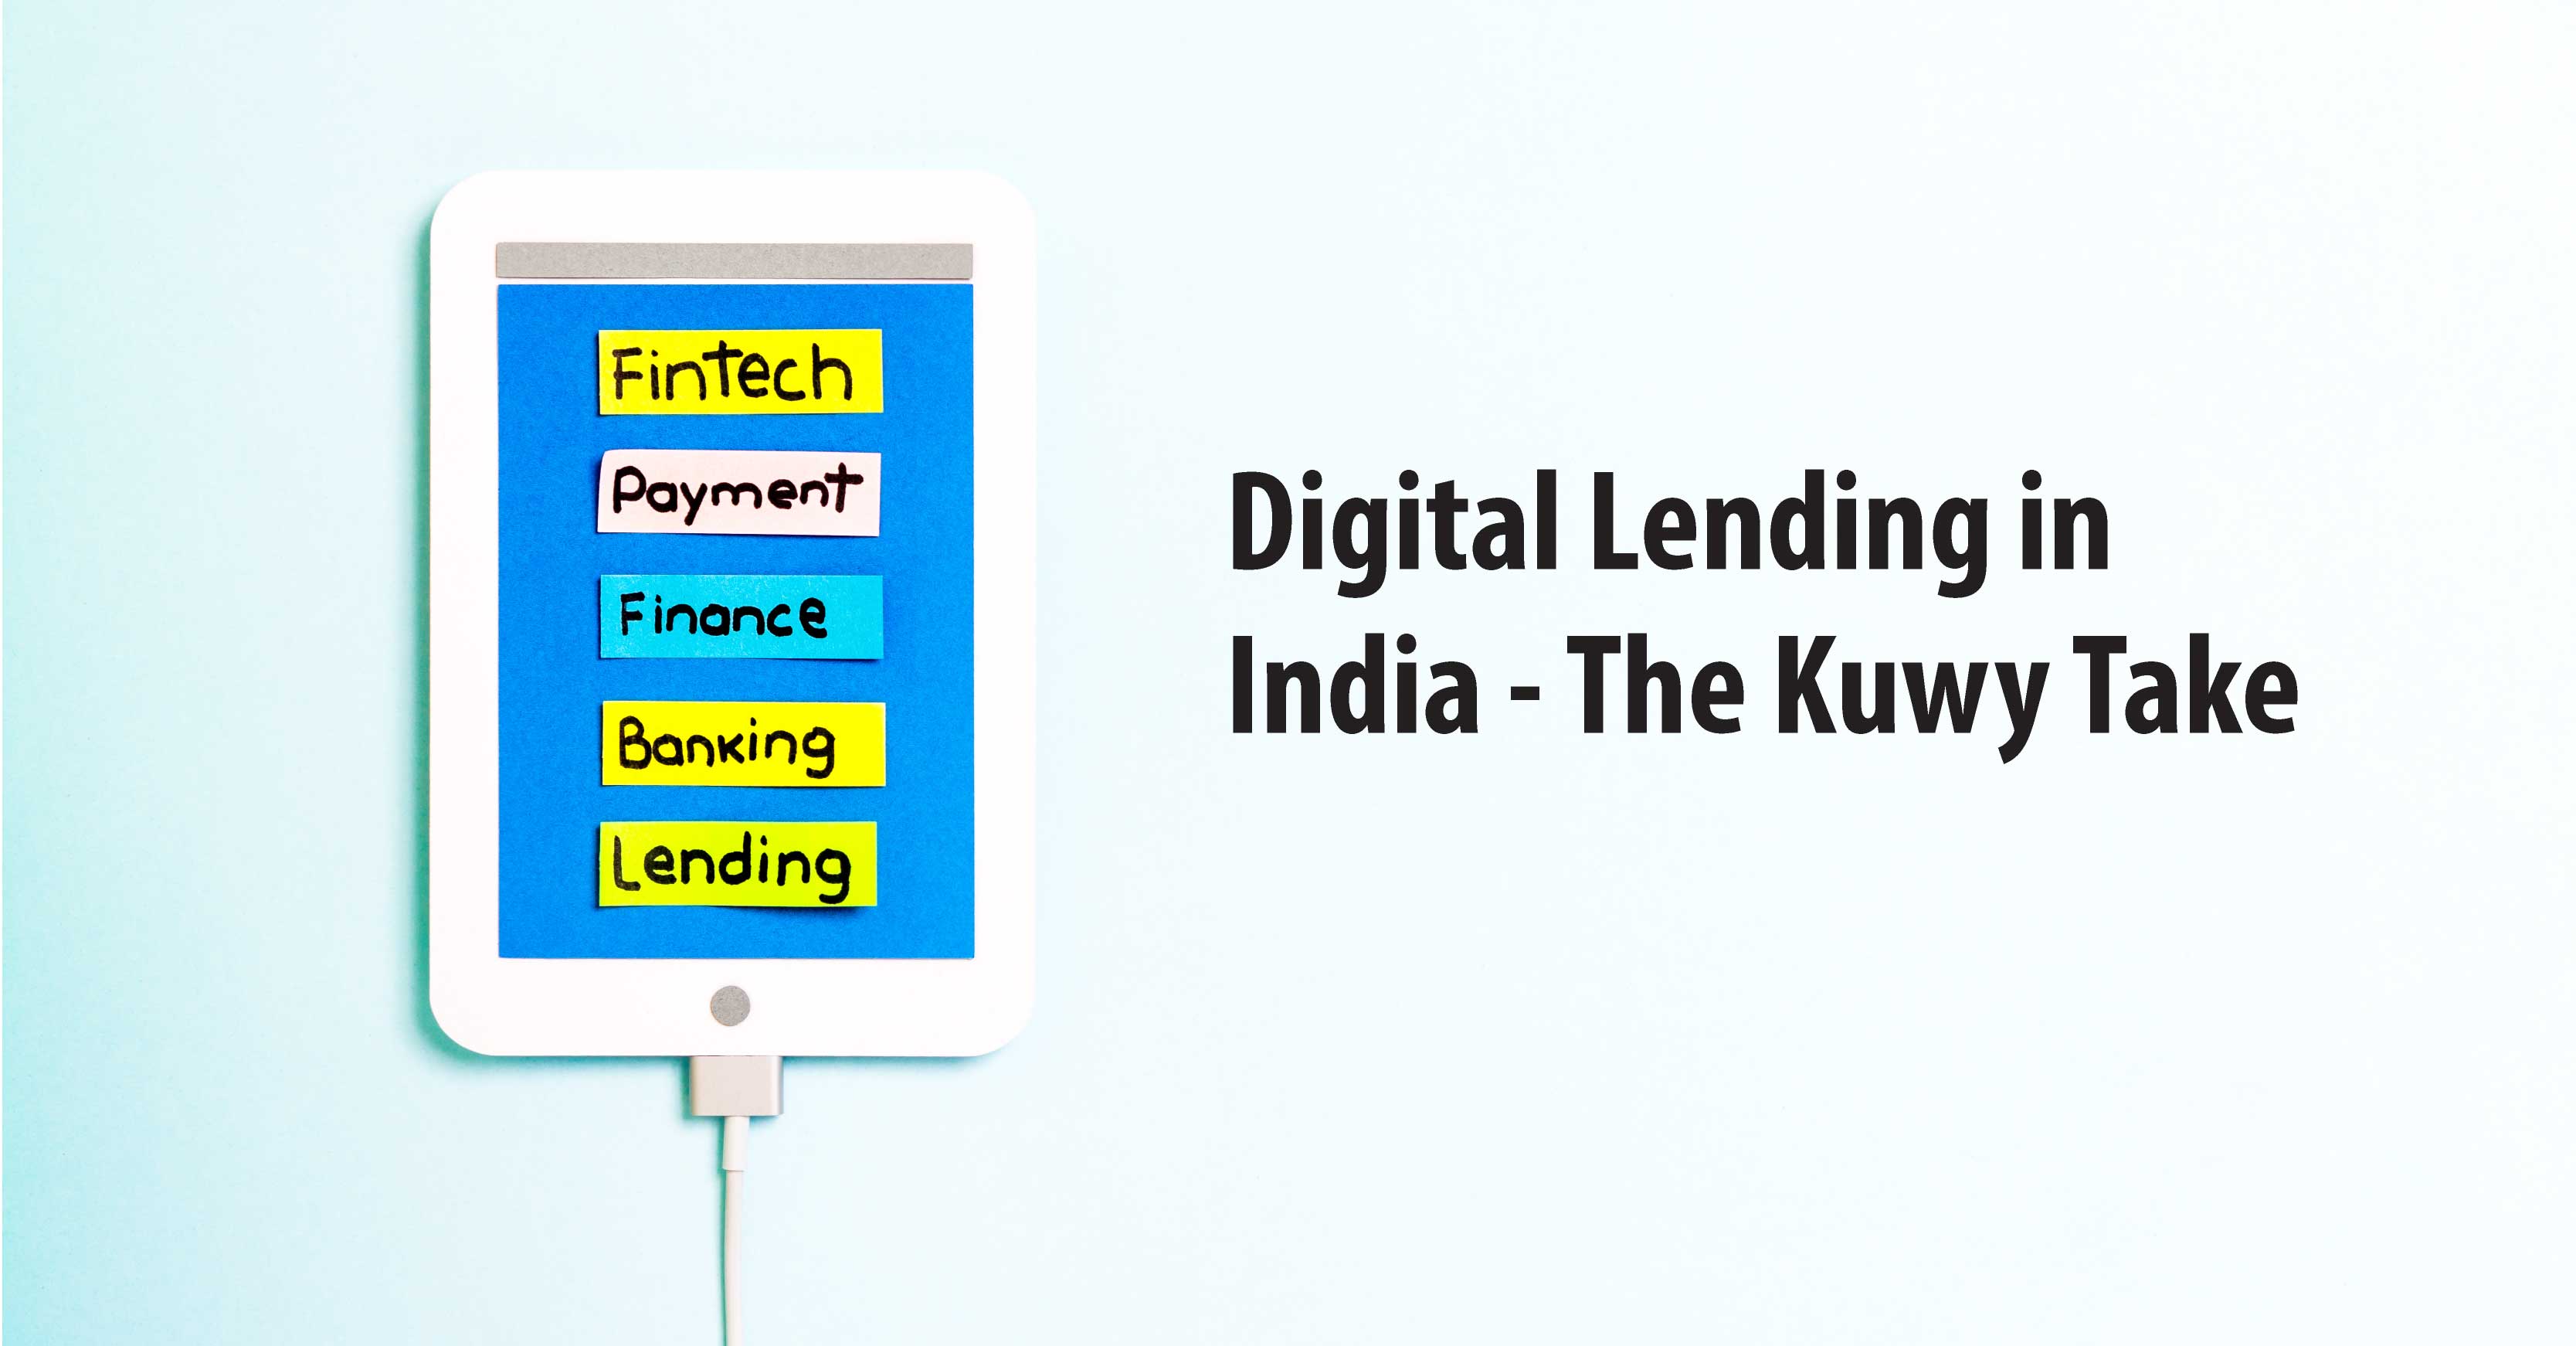 Digital Lending in India - The Kuwy Take